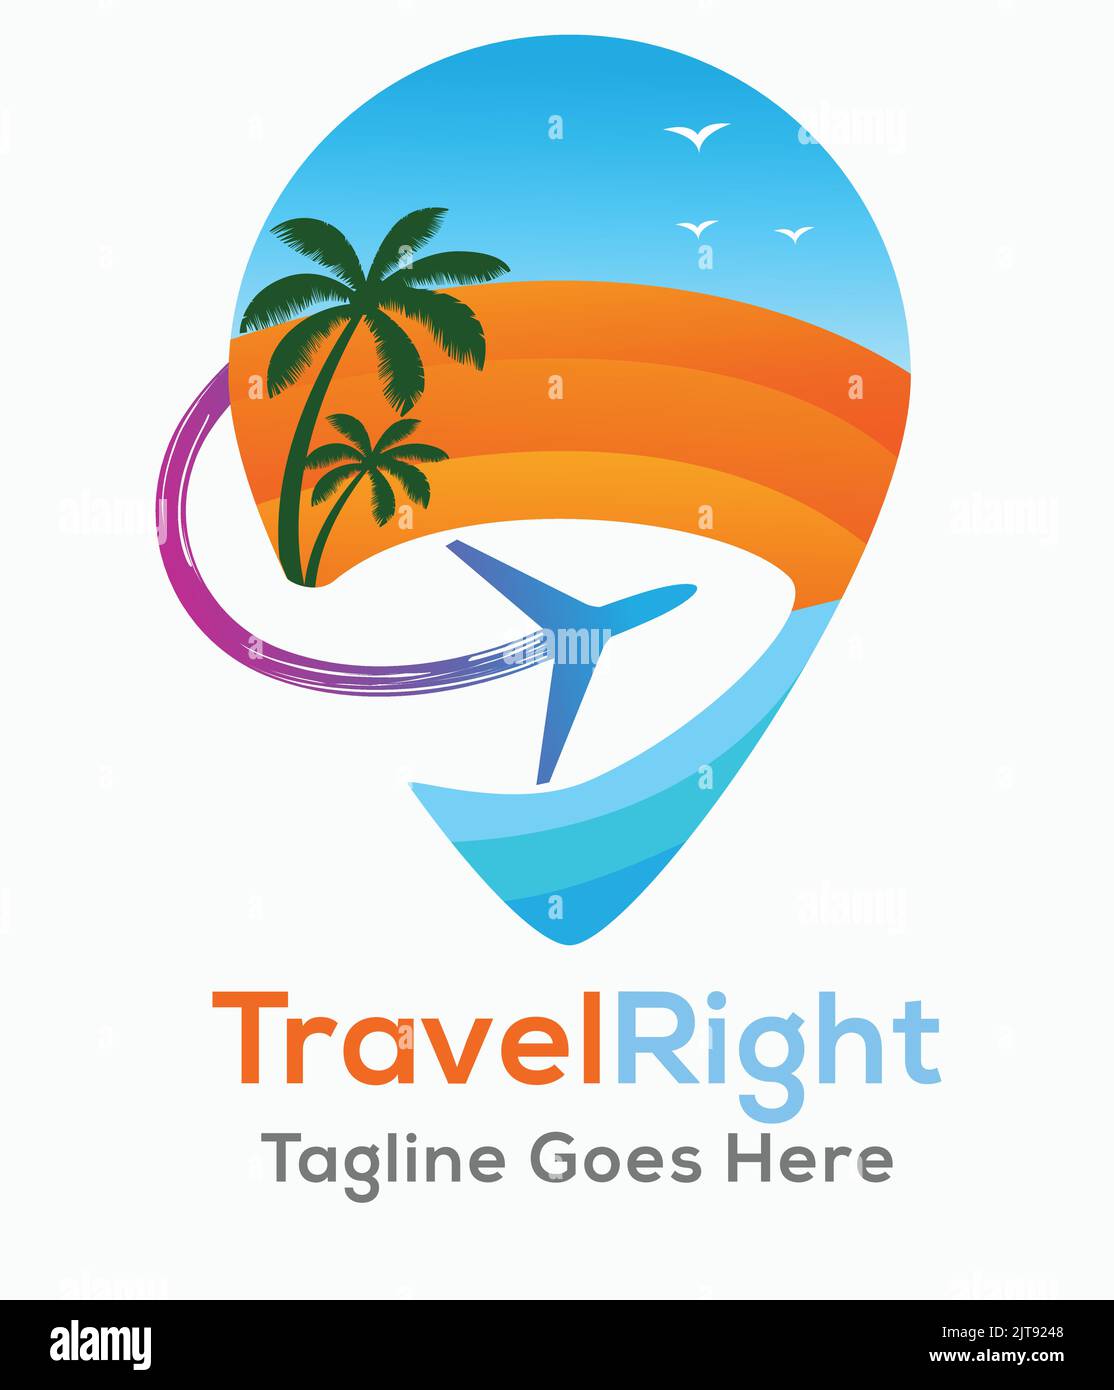 traveling company logo travel logo trip logo airplane beach tourism logo Stock Vector